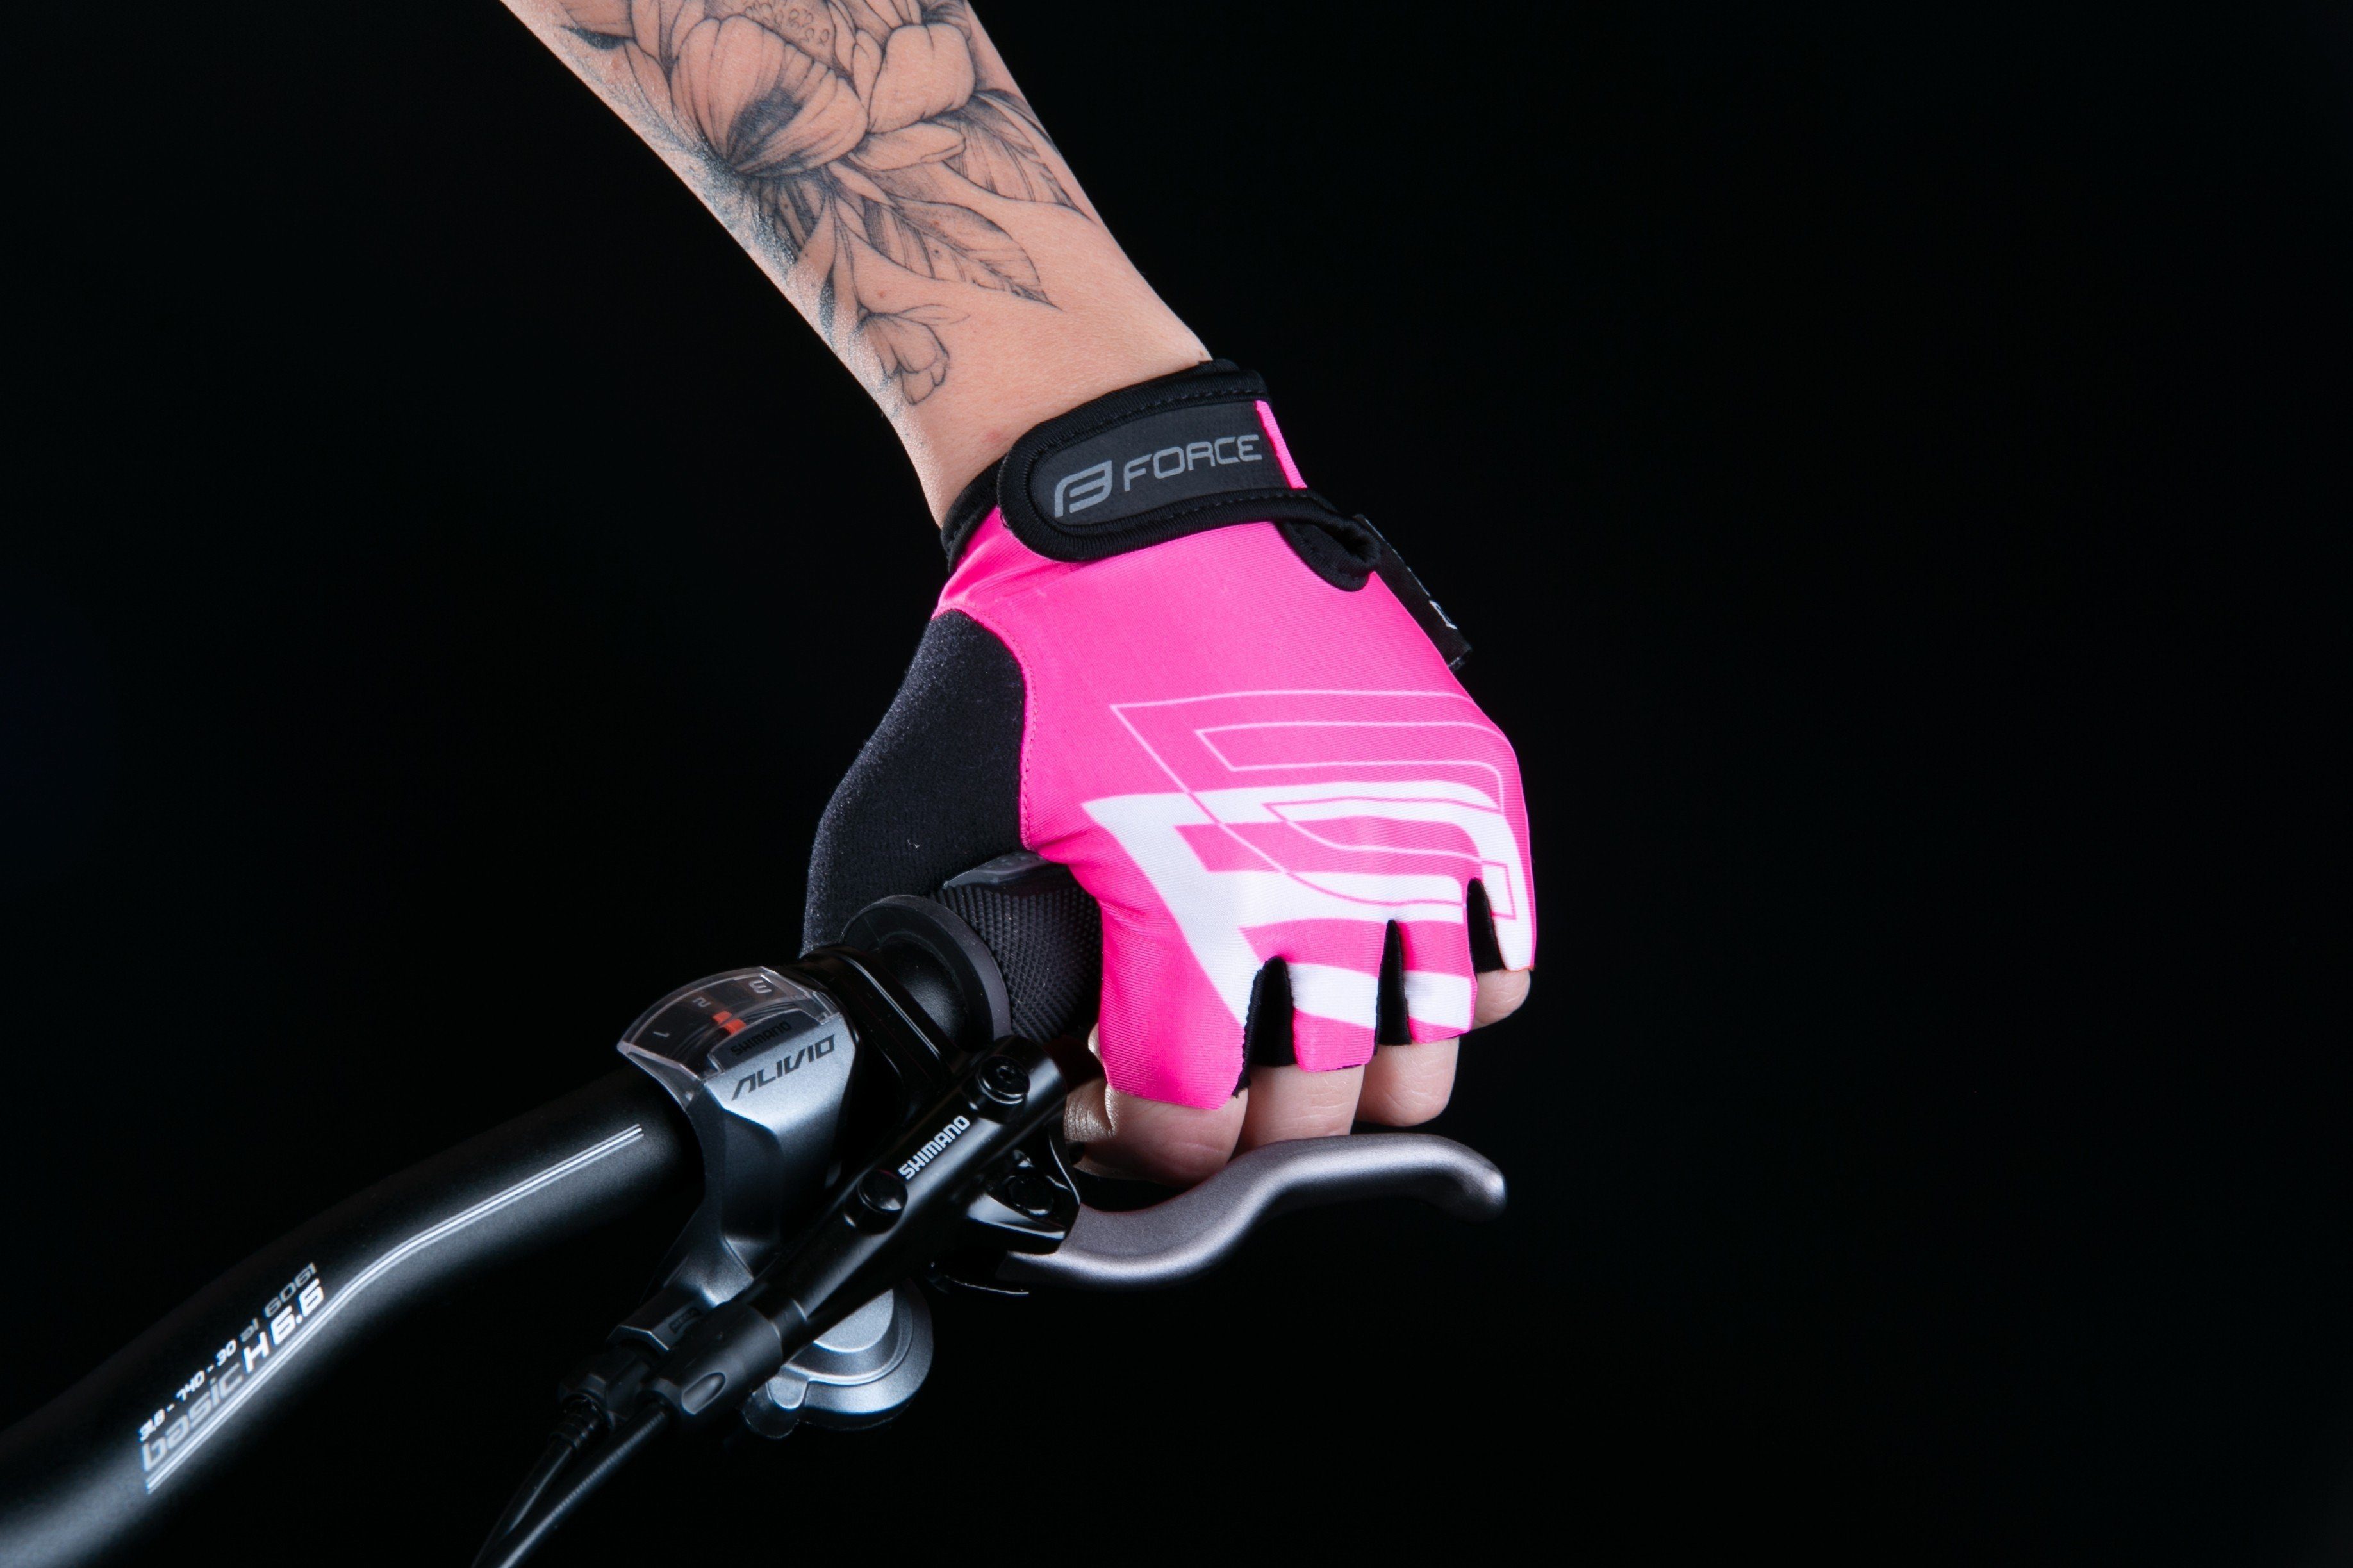 SPORT Handschuhe FORCE Fahrradhandschuhe pink FORCE